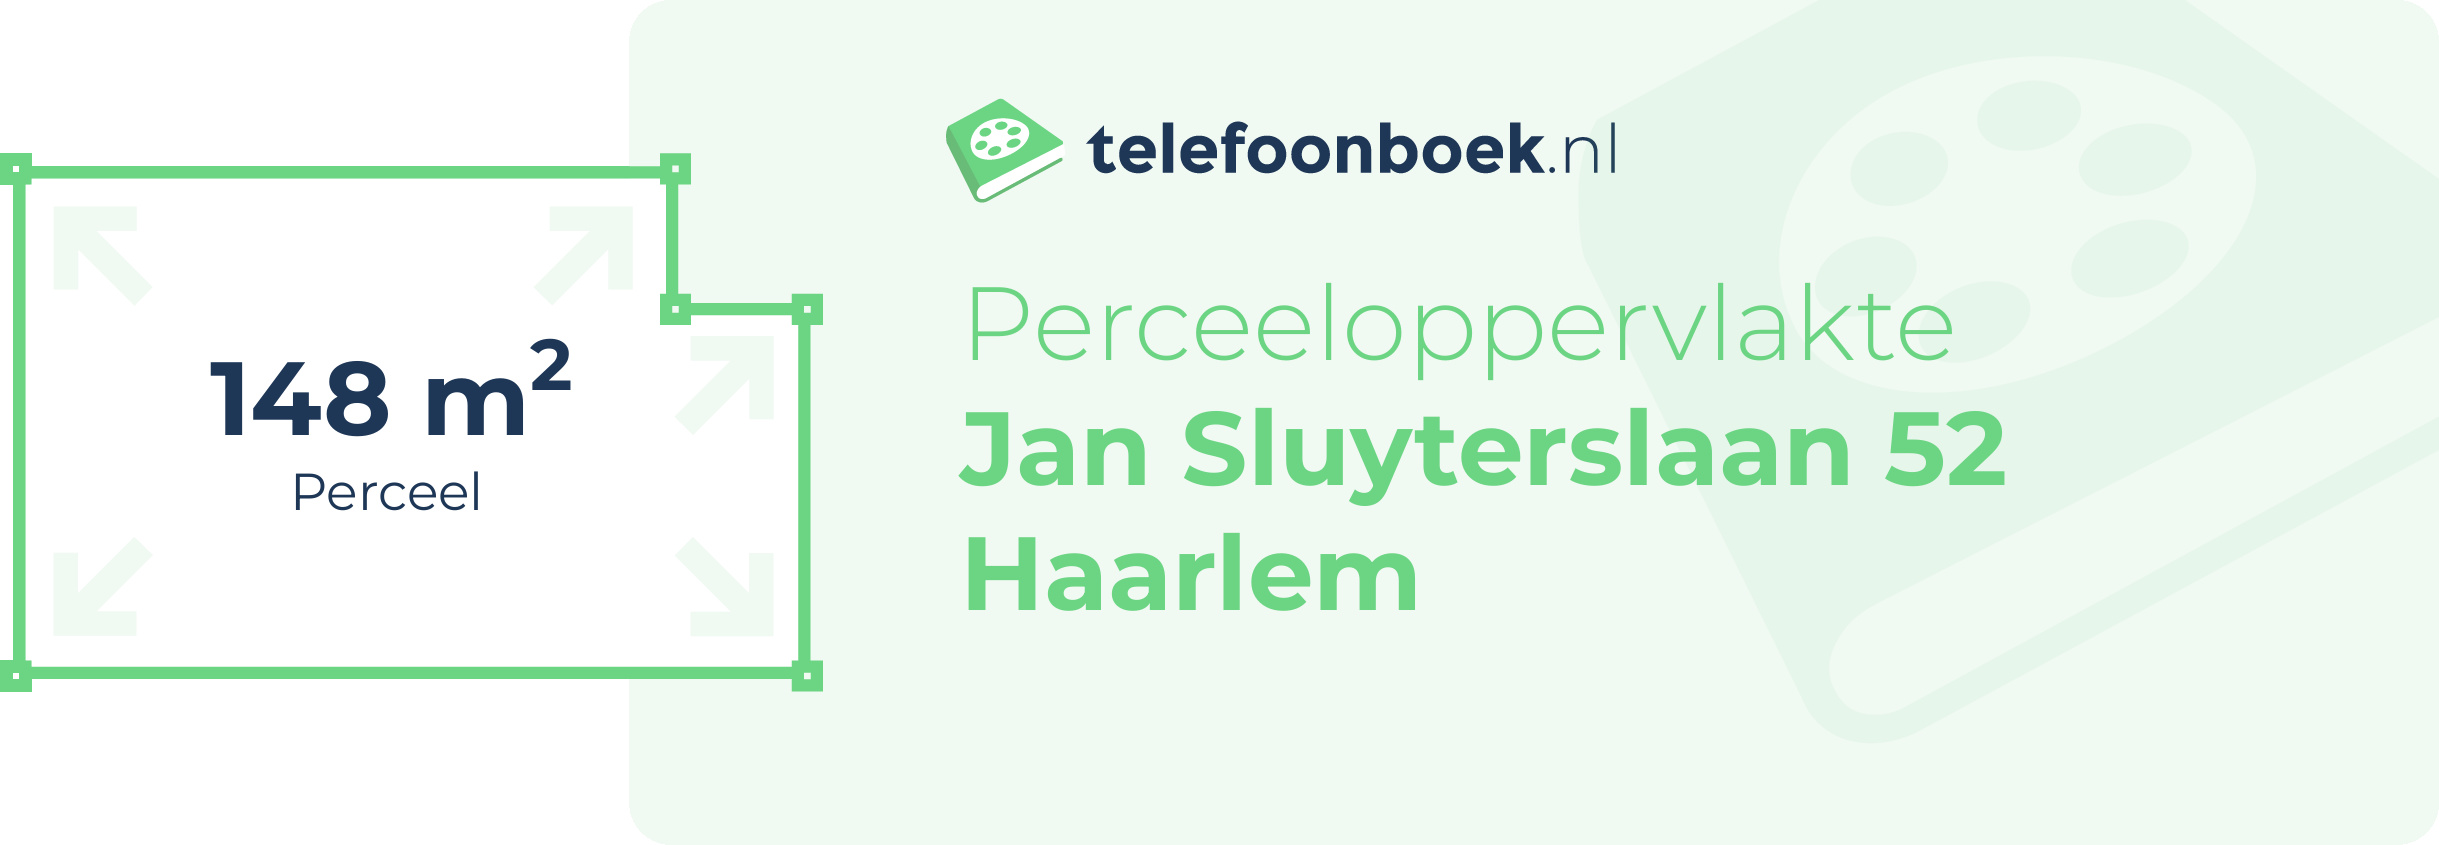 Perceeloppervlakte Jan Sluyterslaan 52 Haarlem